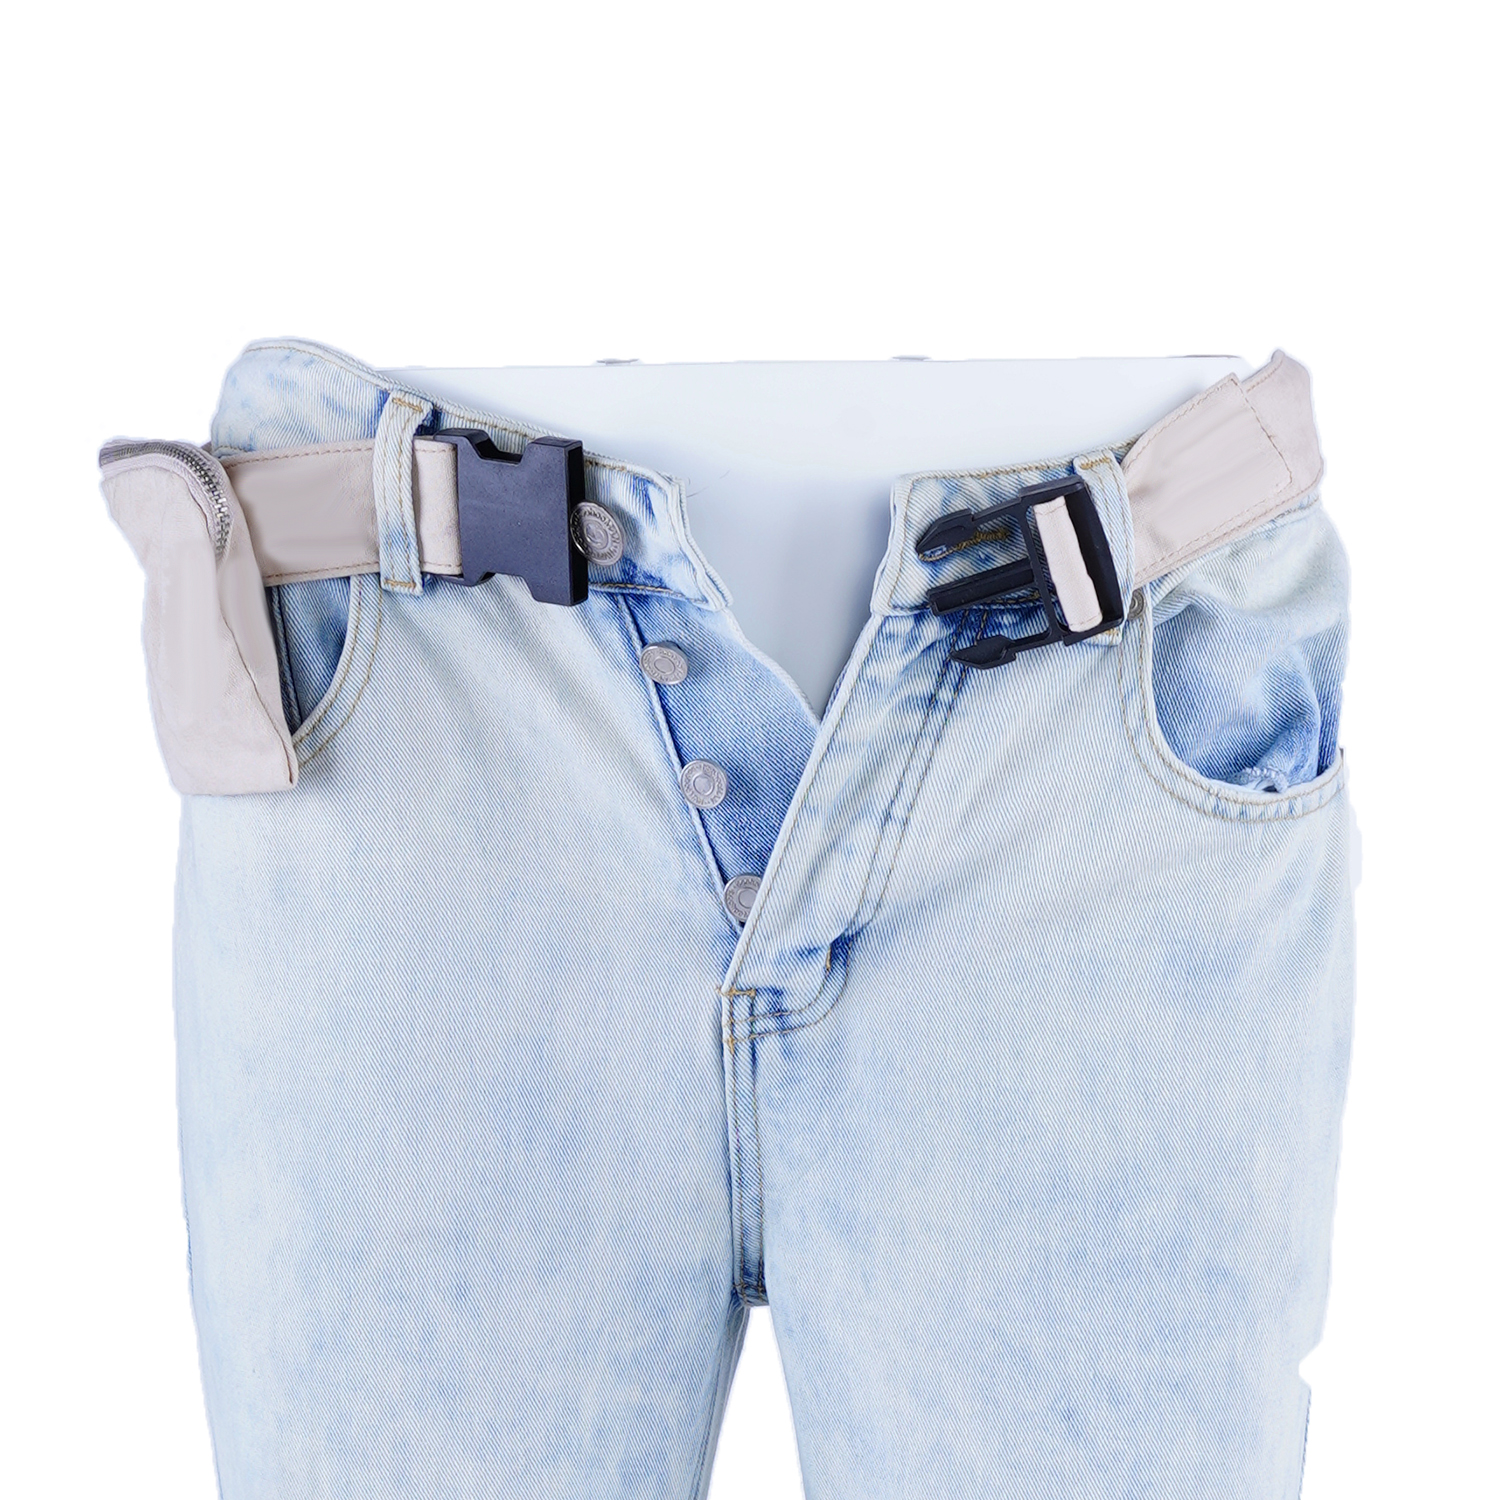 SKYKINGDOM low price in stock waist bag leg button skinny jeans for men